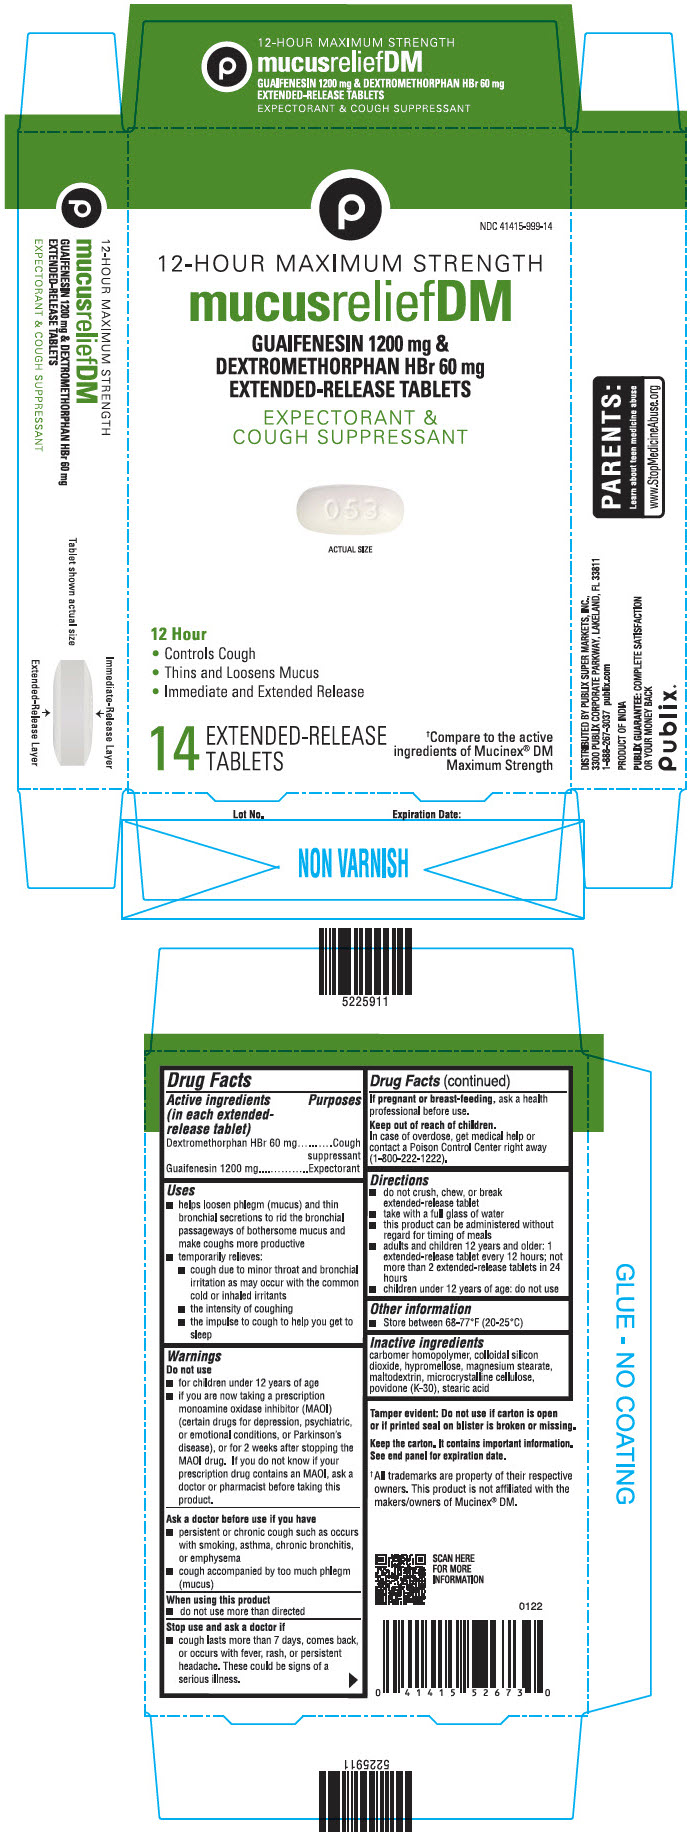 PRINCIPAL DISPLAY PANEL - 14 Tablet Blister Pack Carton